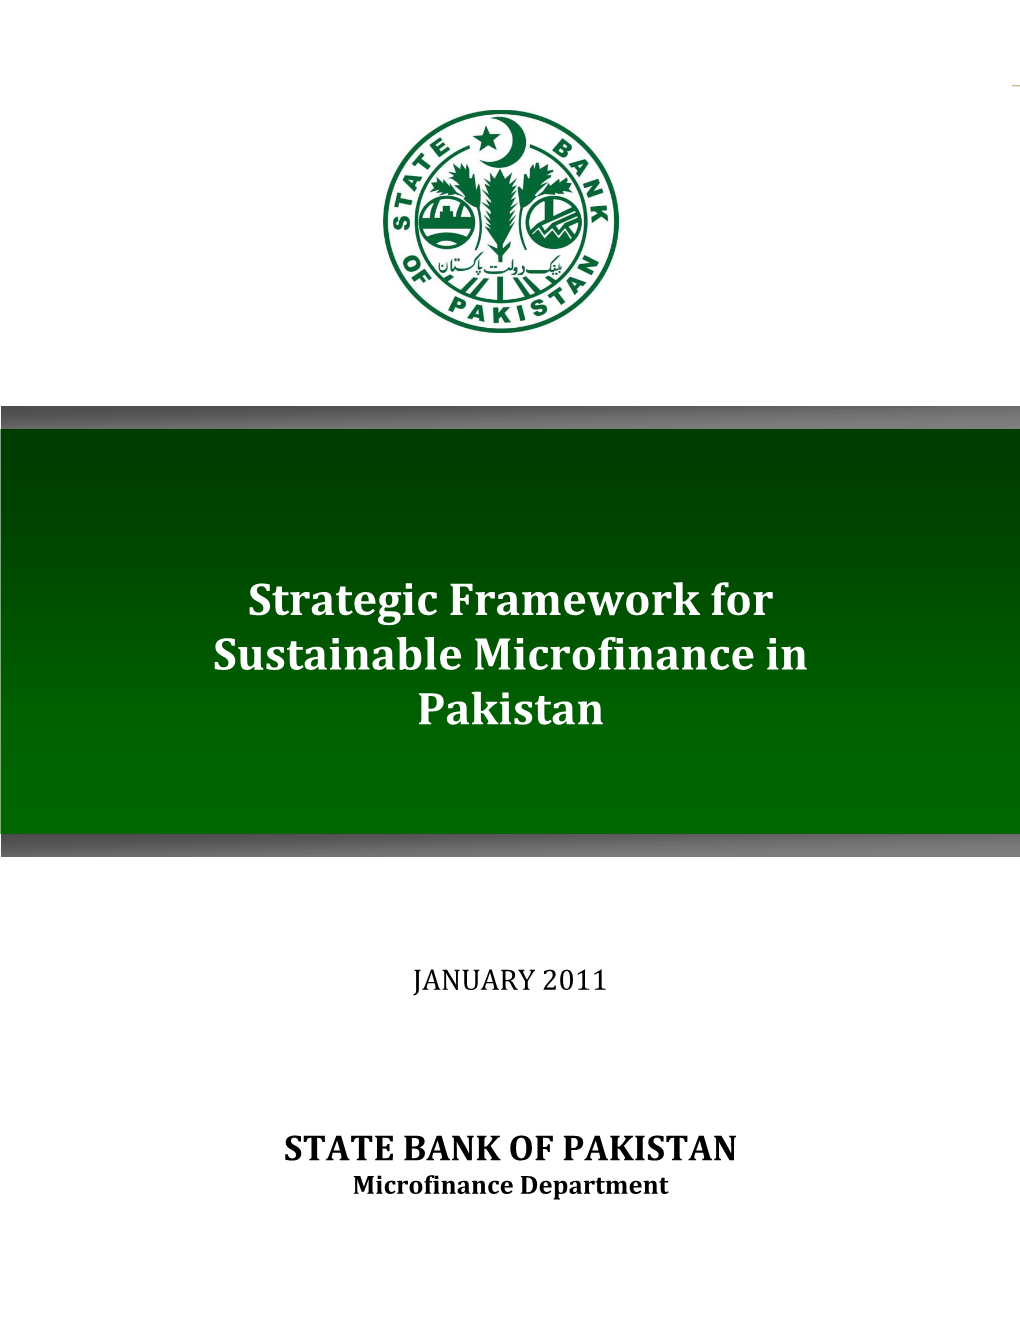 Strategic Framework for Sustainable Microfinance in Pakistan